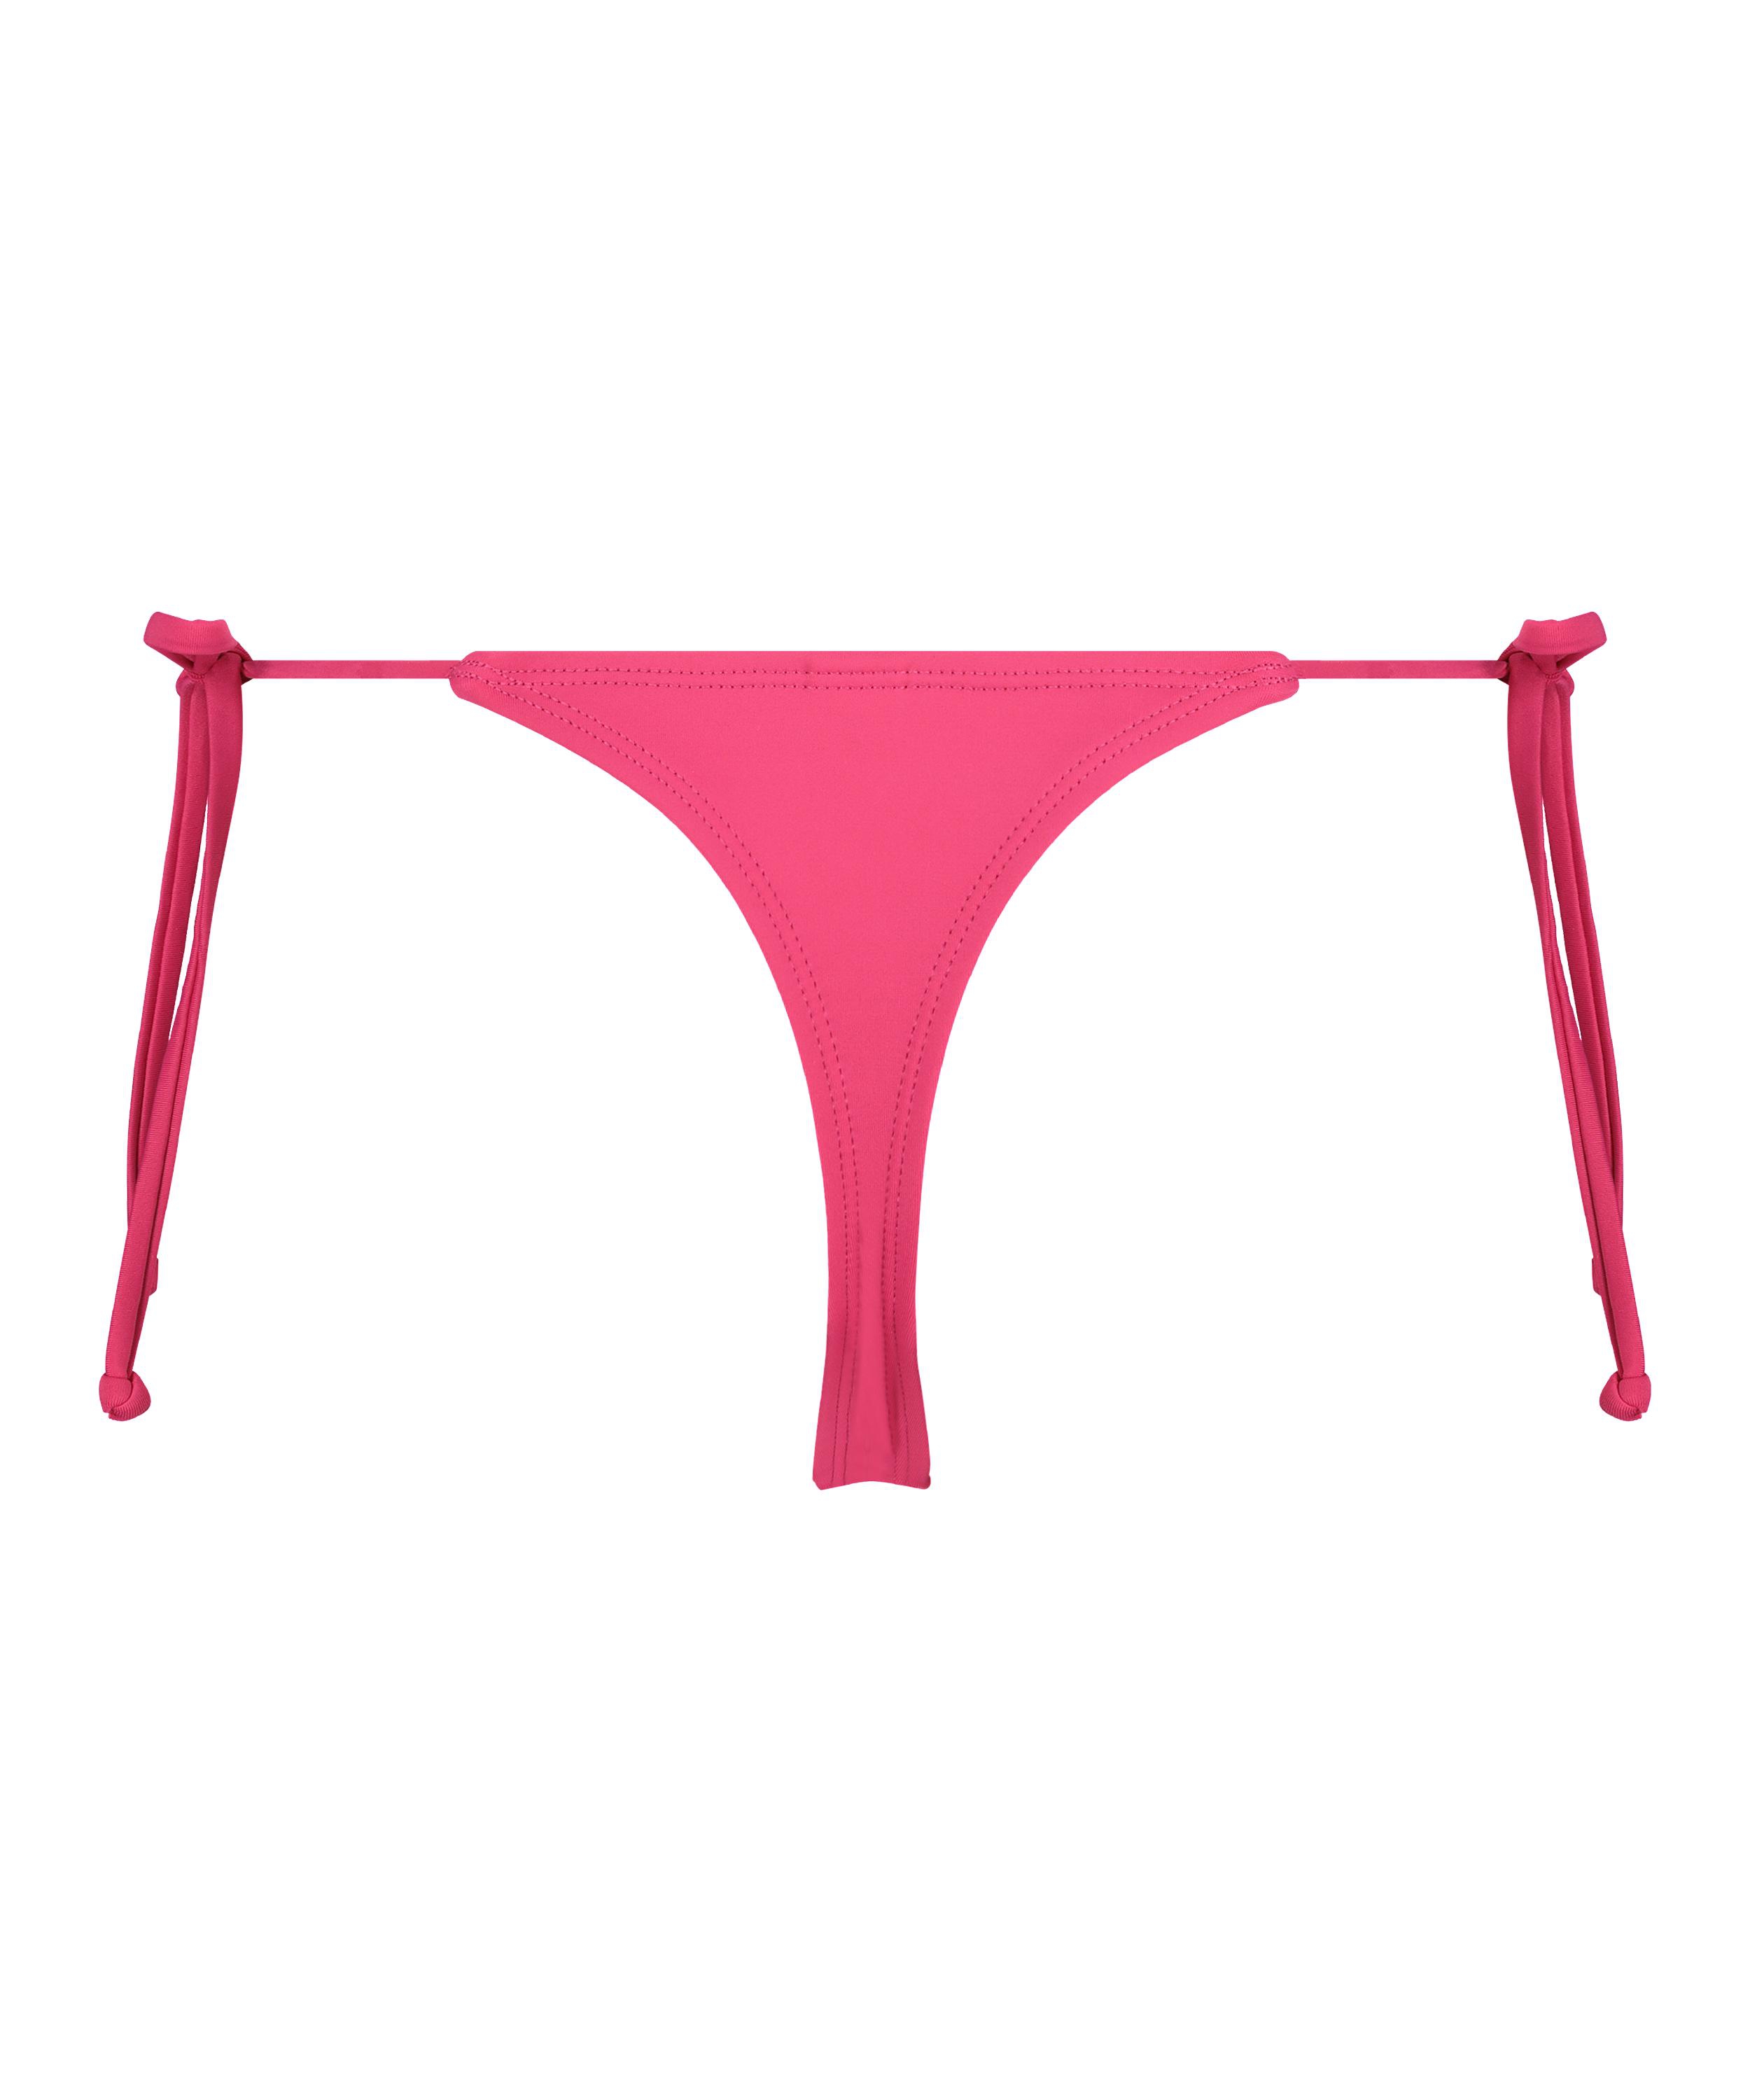 Deluxe Thong Bikini Bottoms, Pink, main